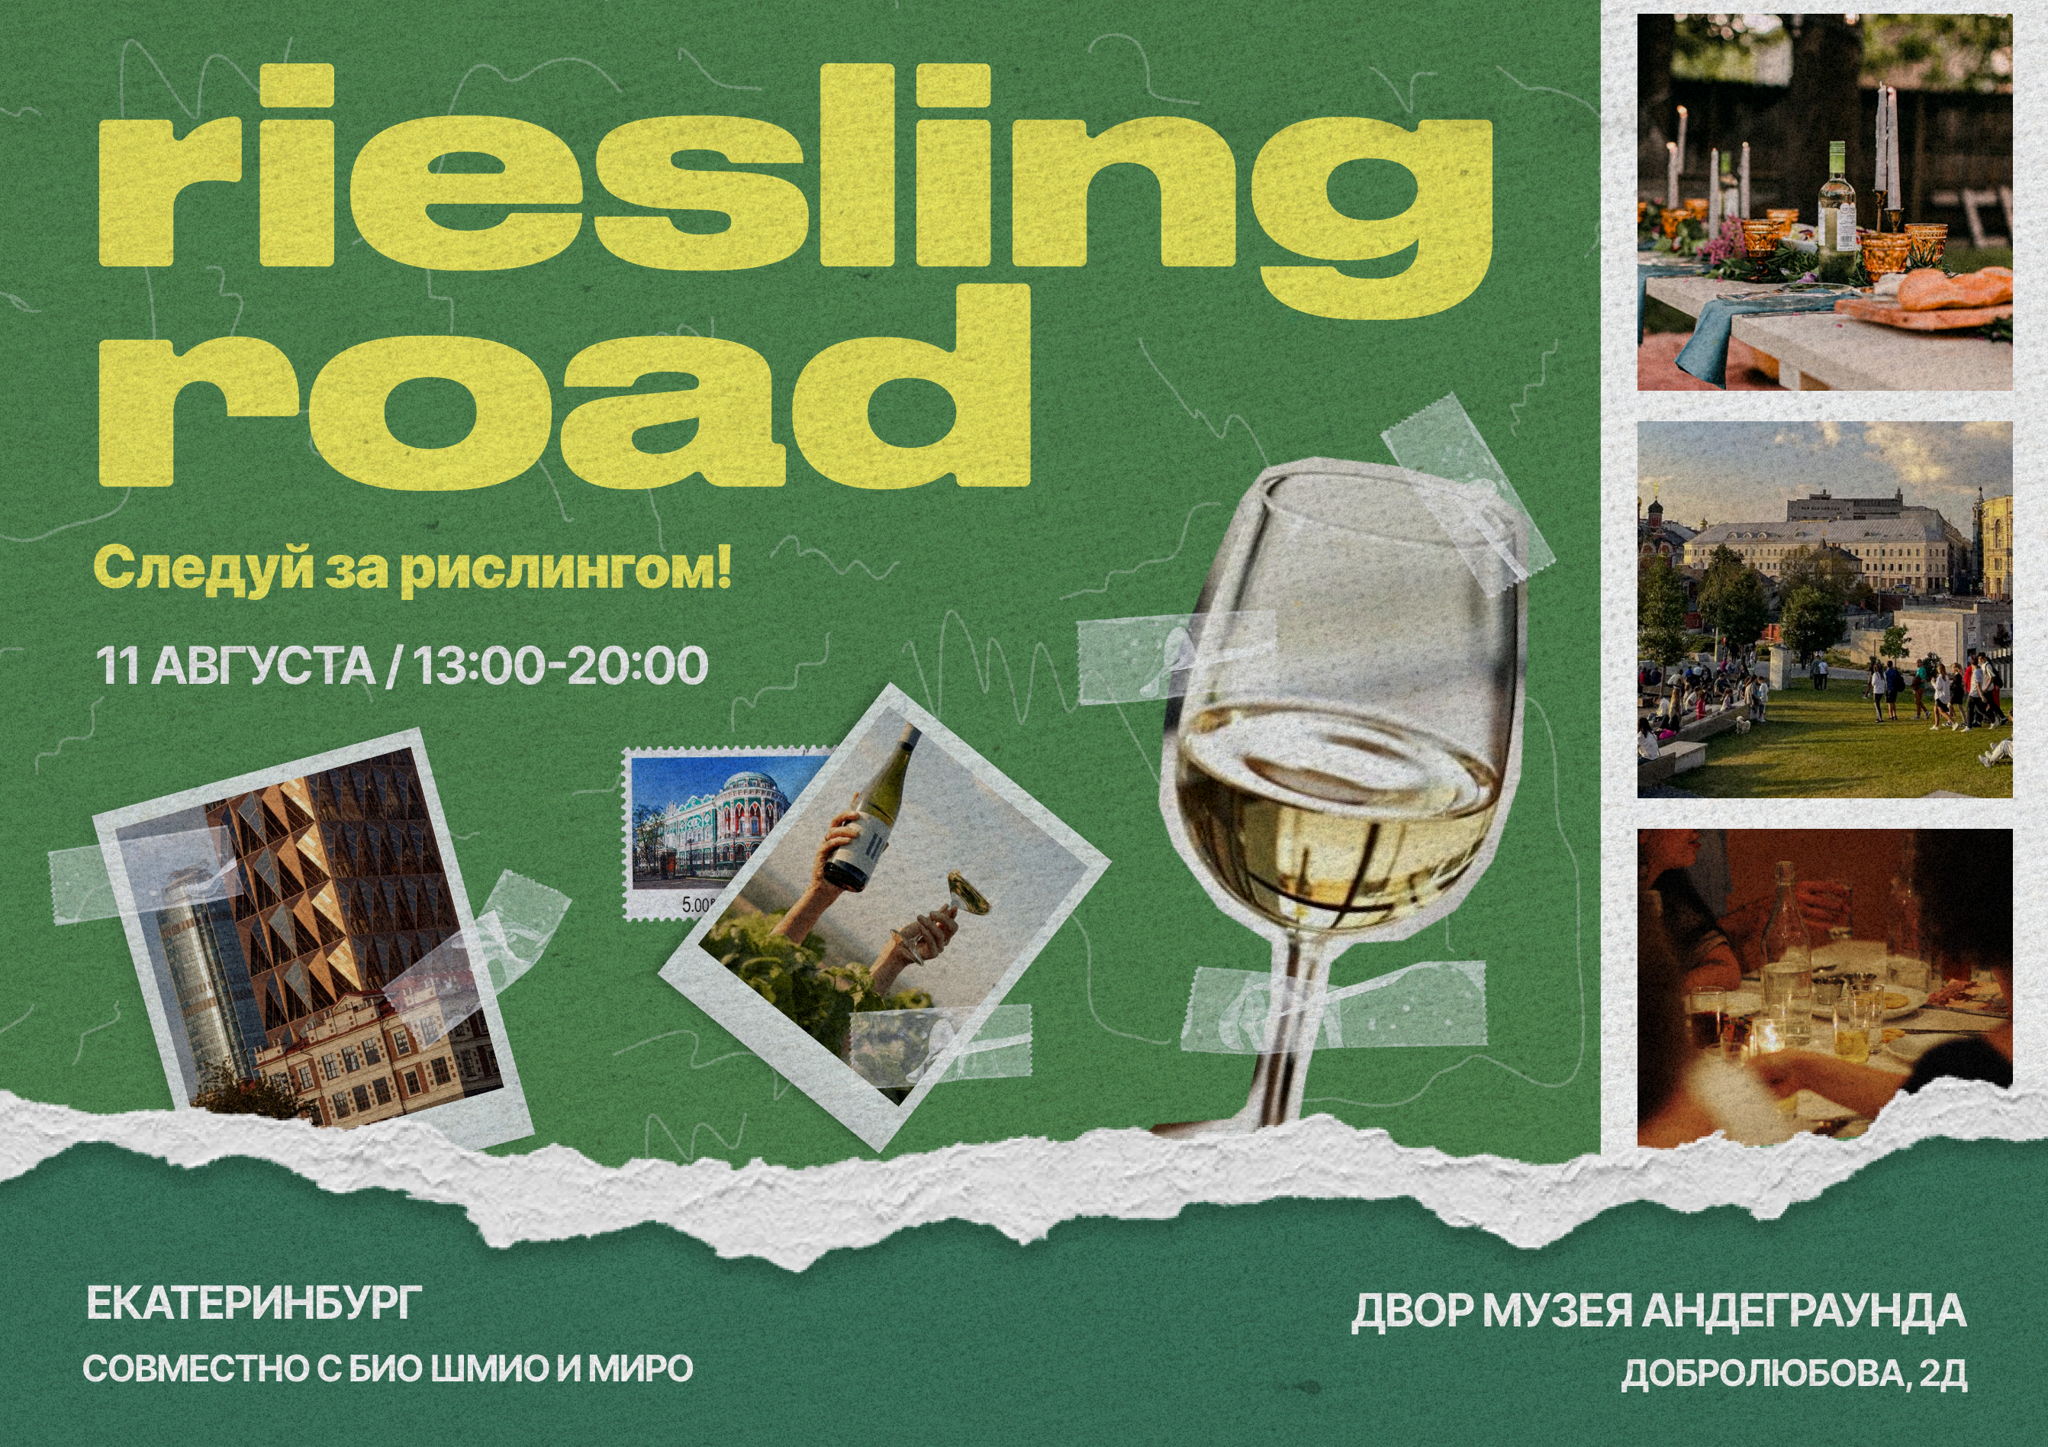 Riesling Road фестиваль рислингов! Екатеринбург_